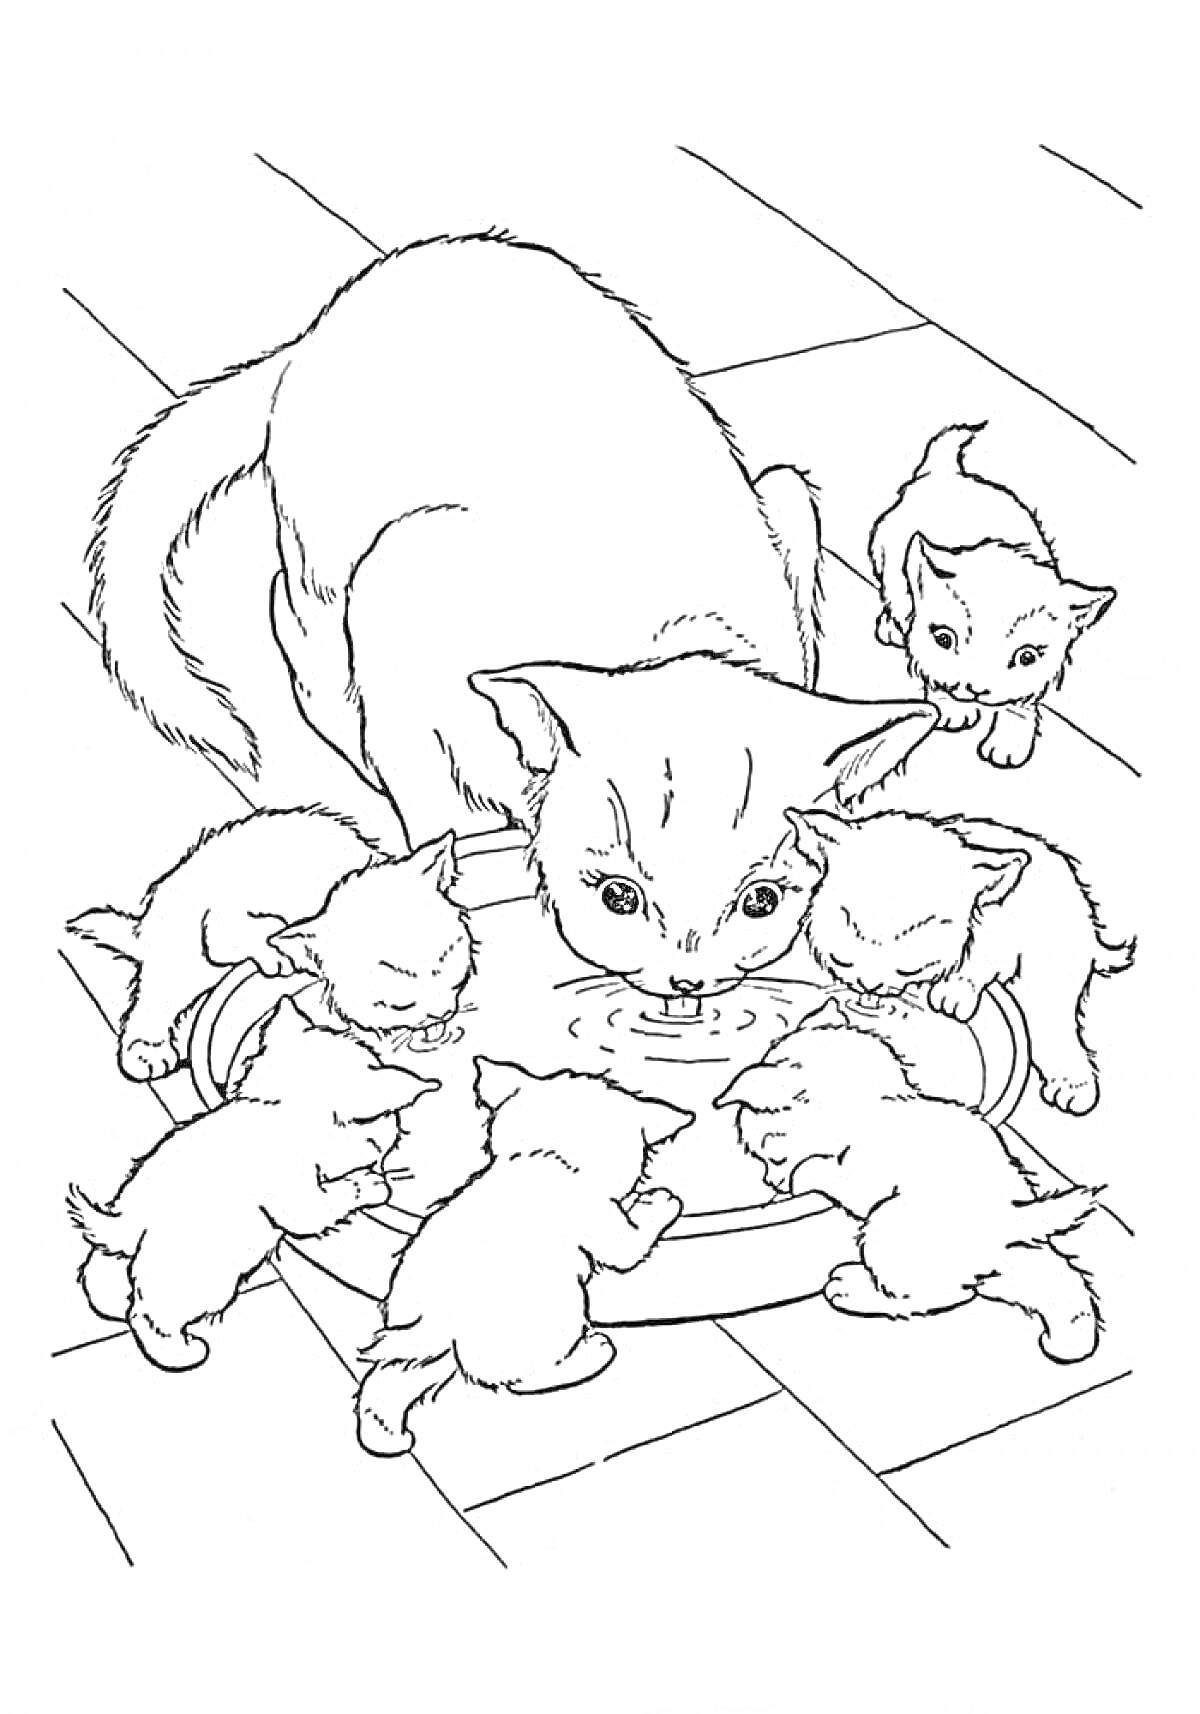 Кошка с шестью котятами, лакомящимися из миски на полу